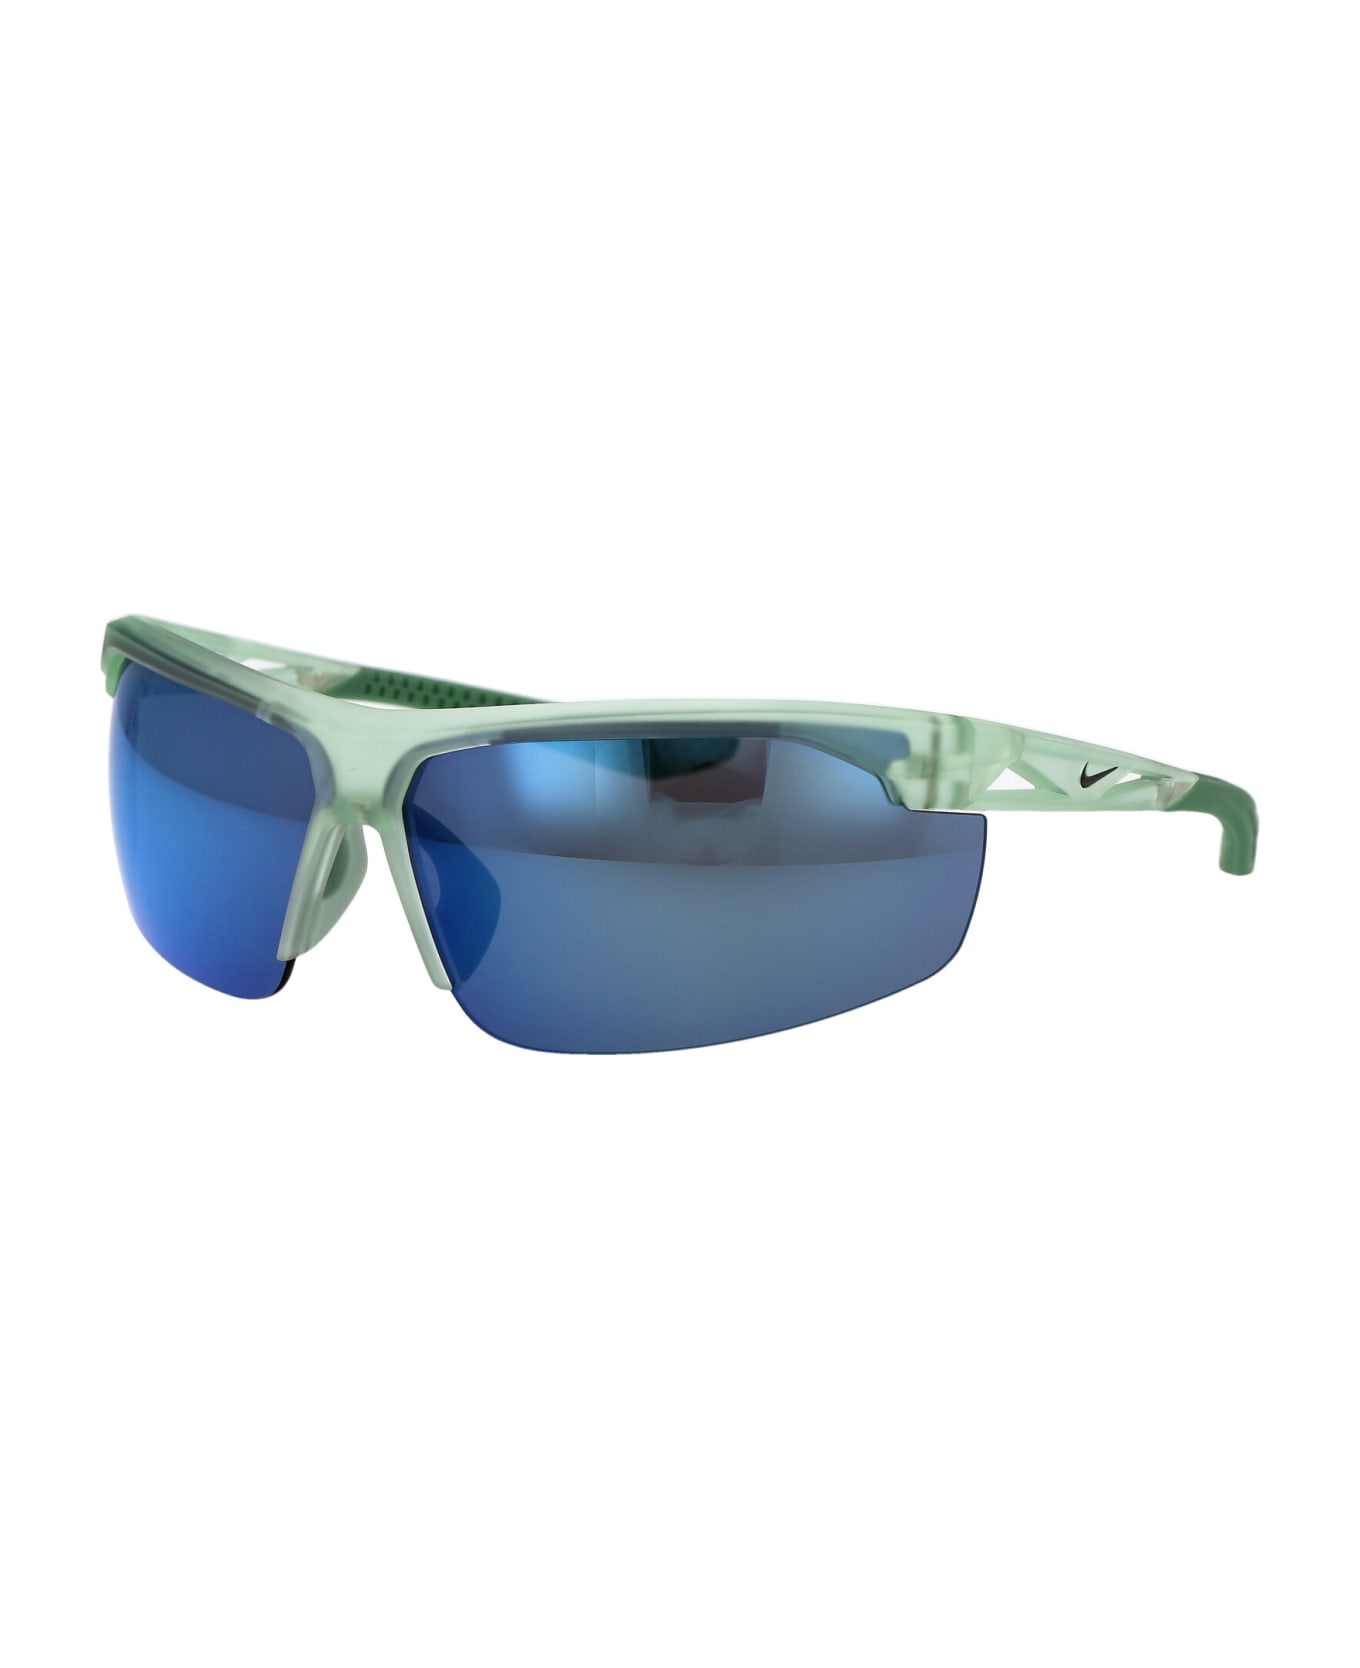 Nike Windtrack M Sunglasses - 301 SOLID GREY MIRROR MATTE JADE ICE